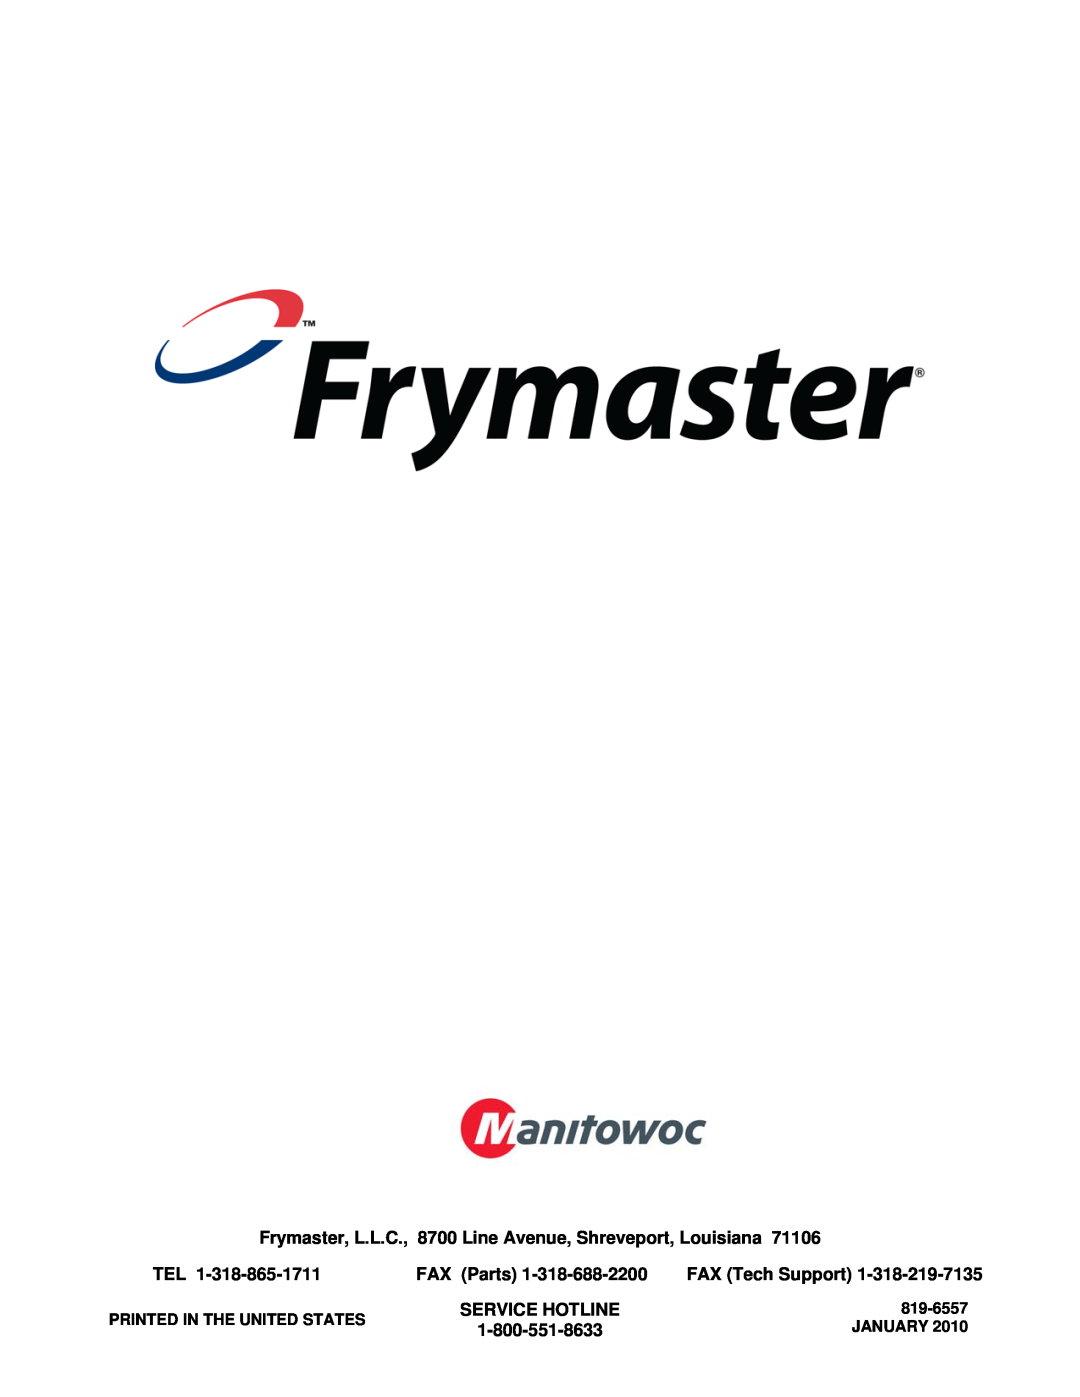 Frymaster HD1814G Frymaster, L.L.C., 8700 Line Avenue, Shreveport, Louisiana, FAX Parts, FAX Tech Support, Service Hotline 